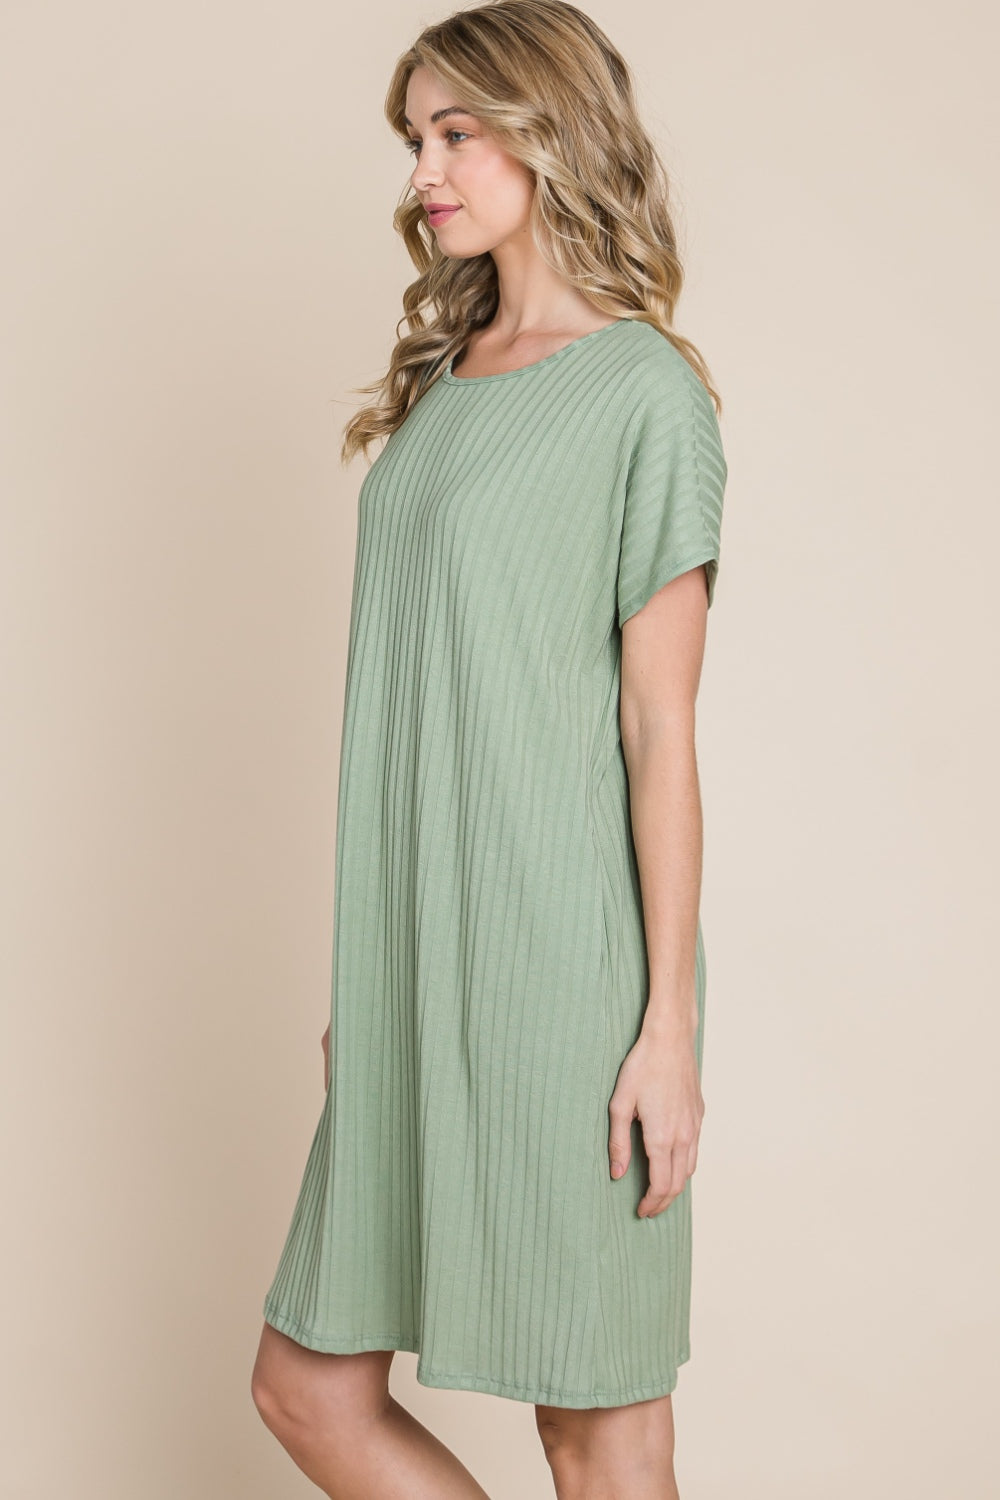 Ribbed Round Neck Short Sleeve Dress for Women | Mini Dress | Ro + Ivy